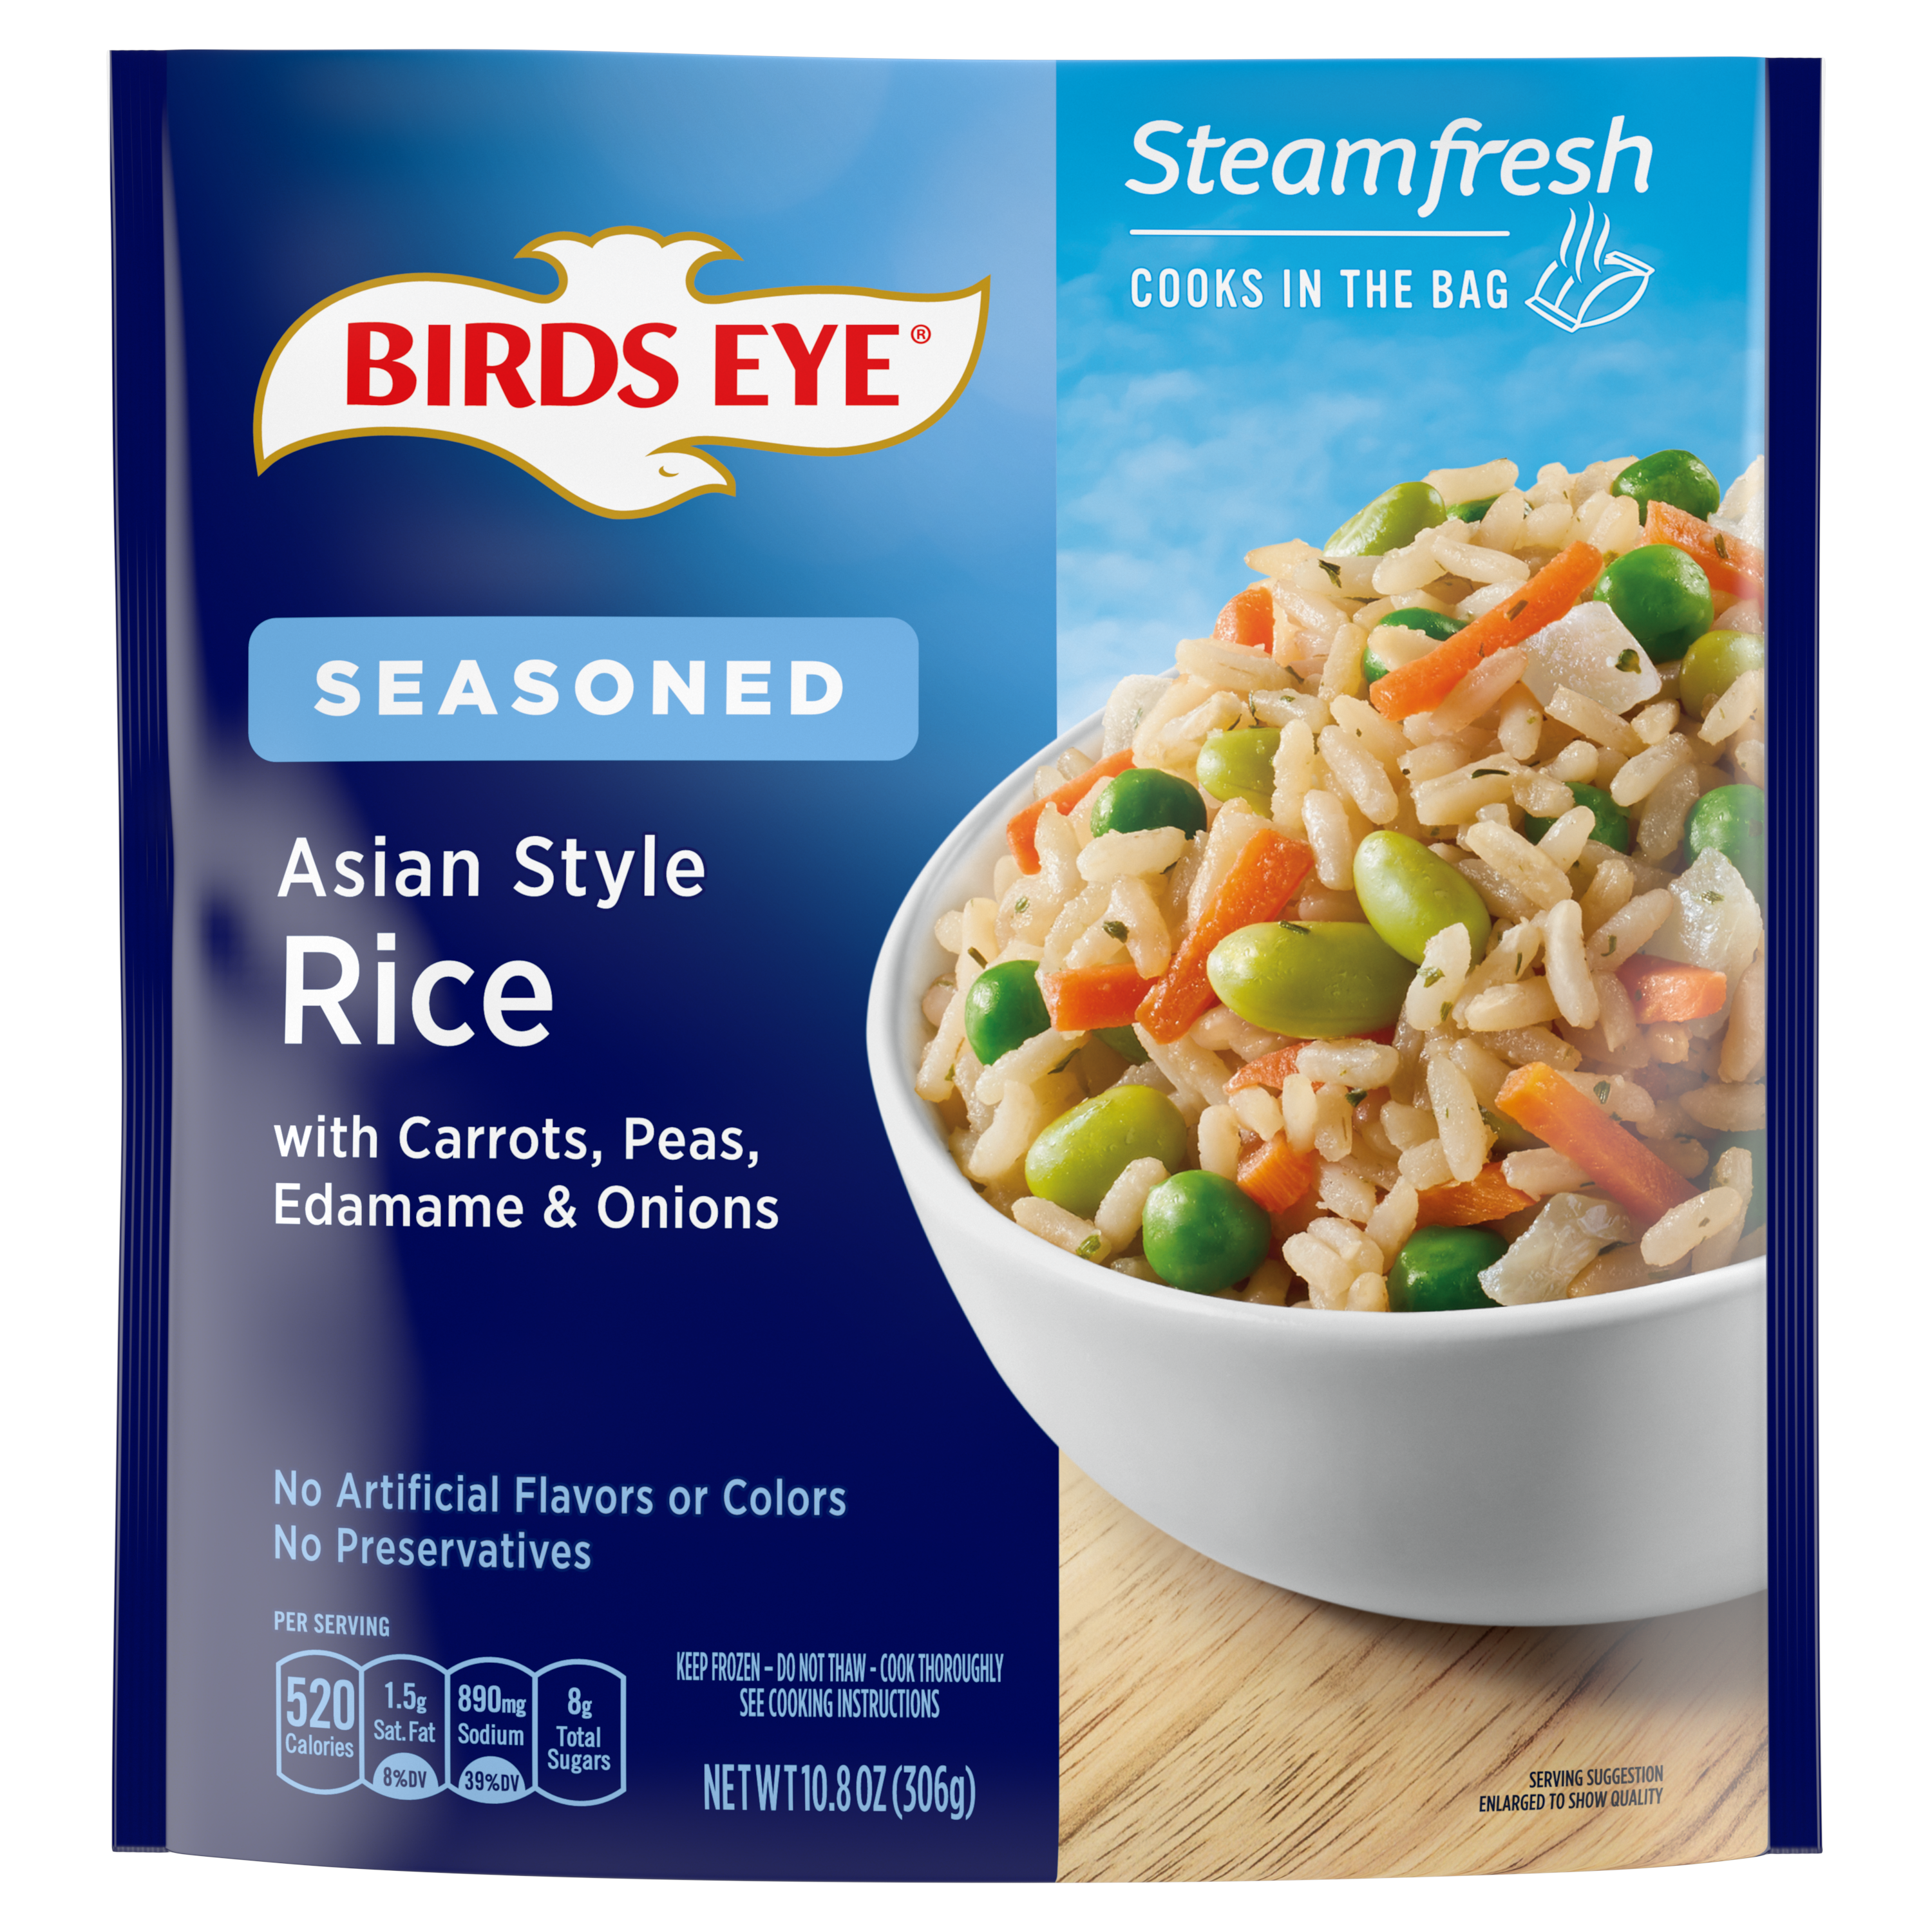 Birds Eye Steamfresh Chef’s Favorites Seasoned Asian Style Rice